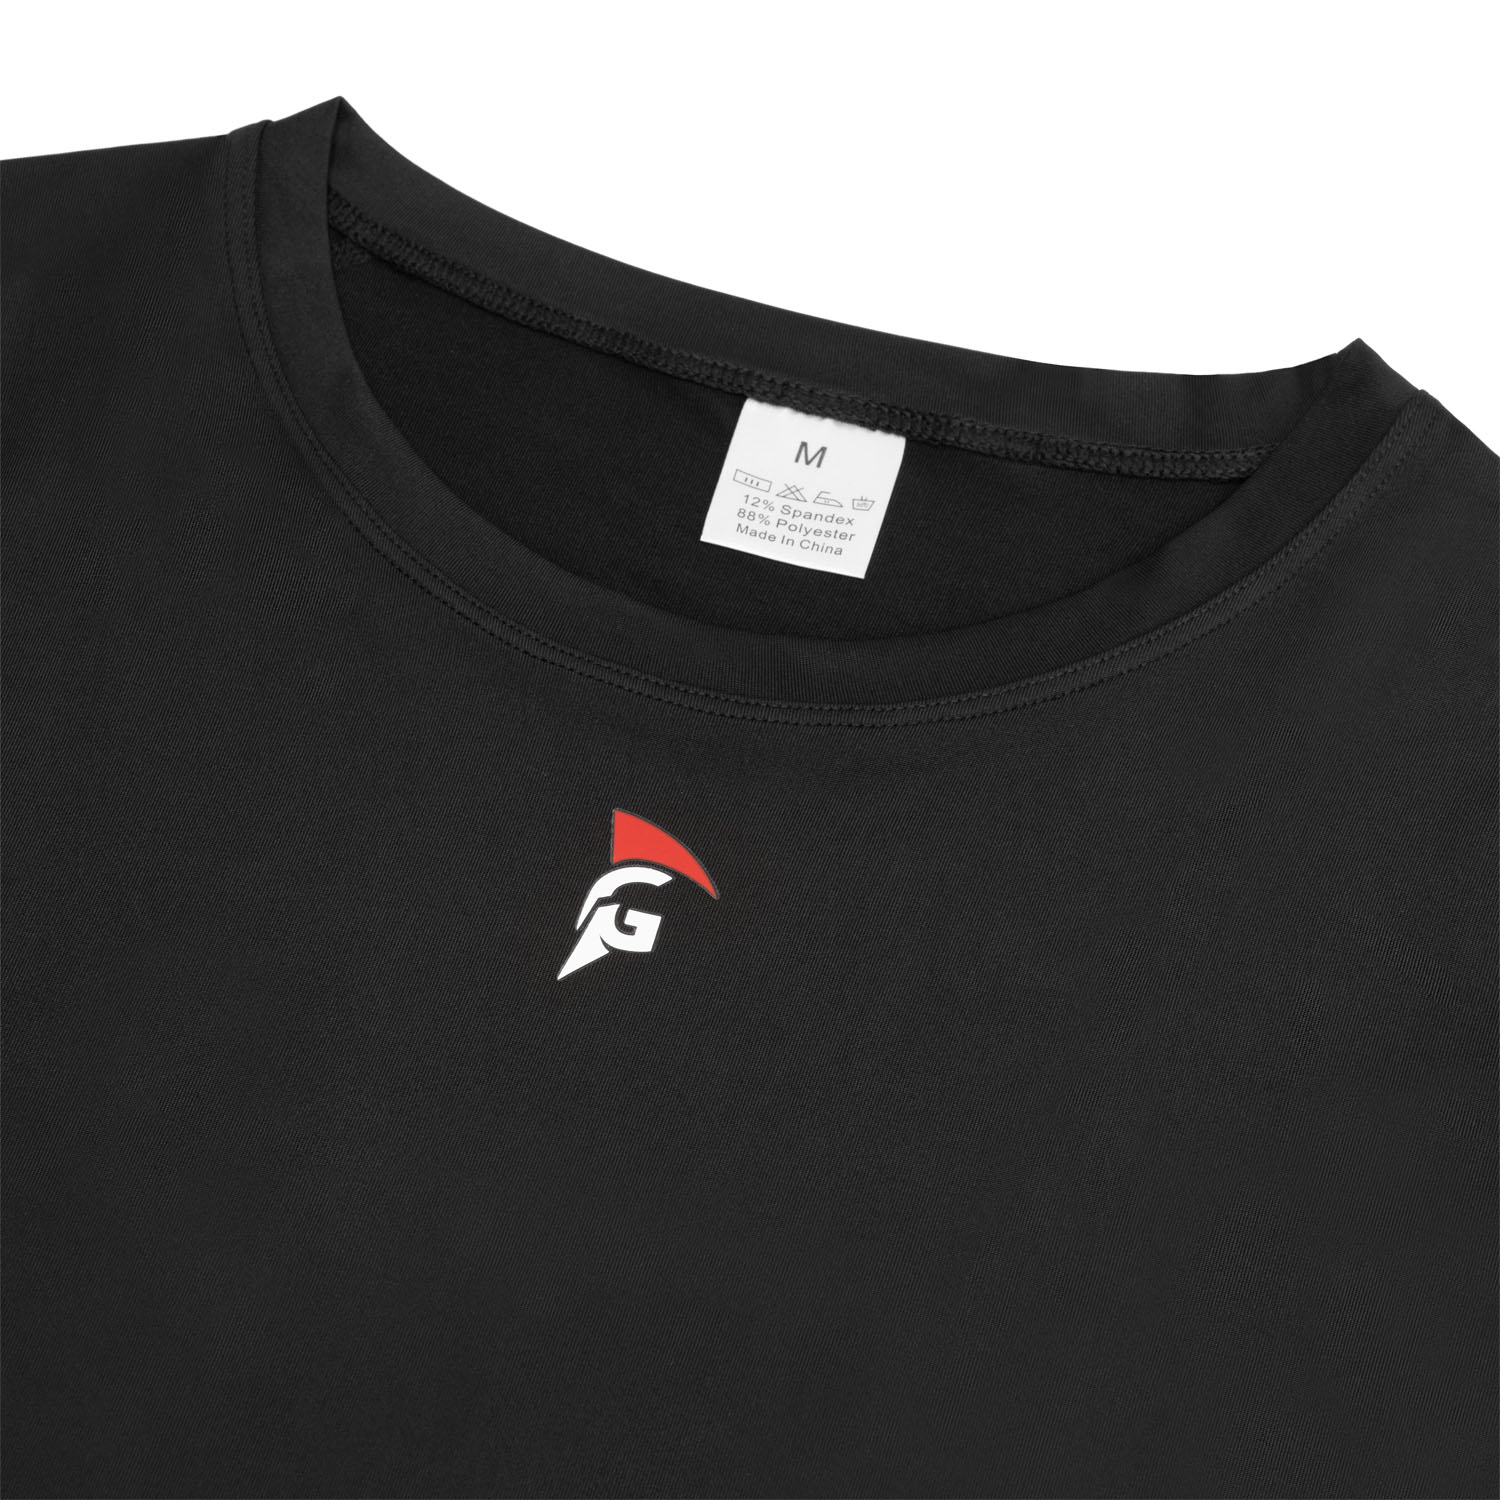 gladiator sports thermal shirt for women in black detail photo